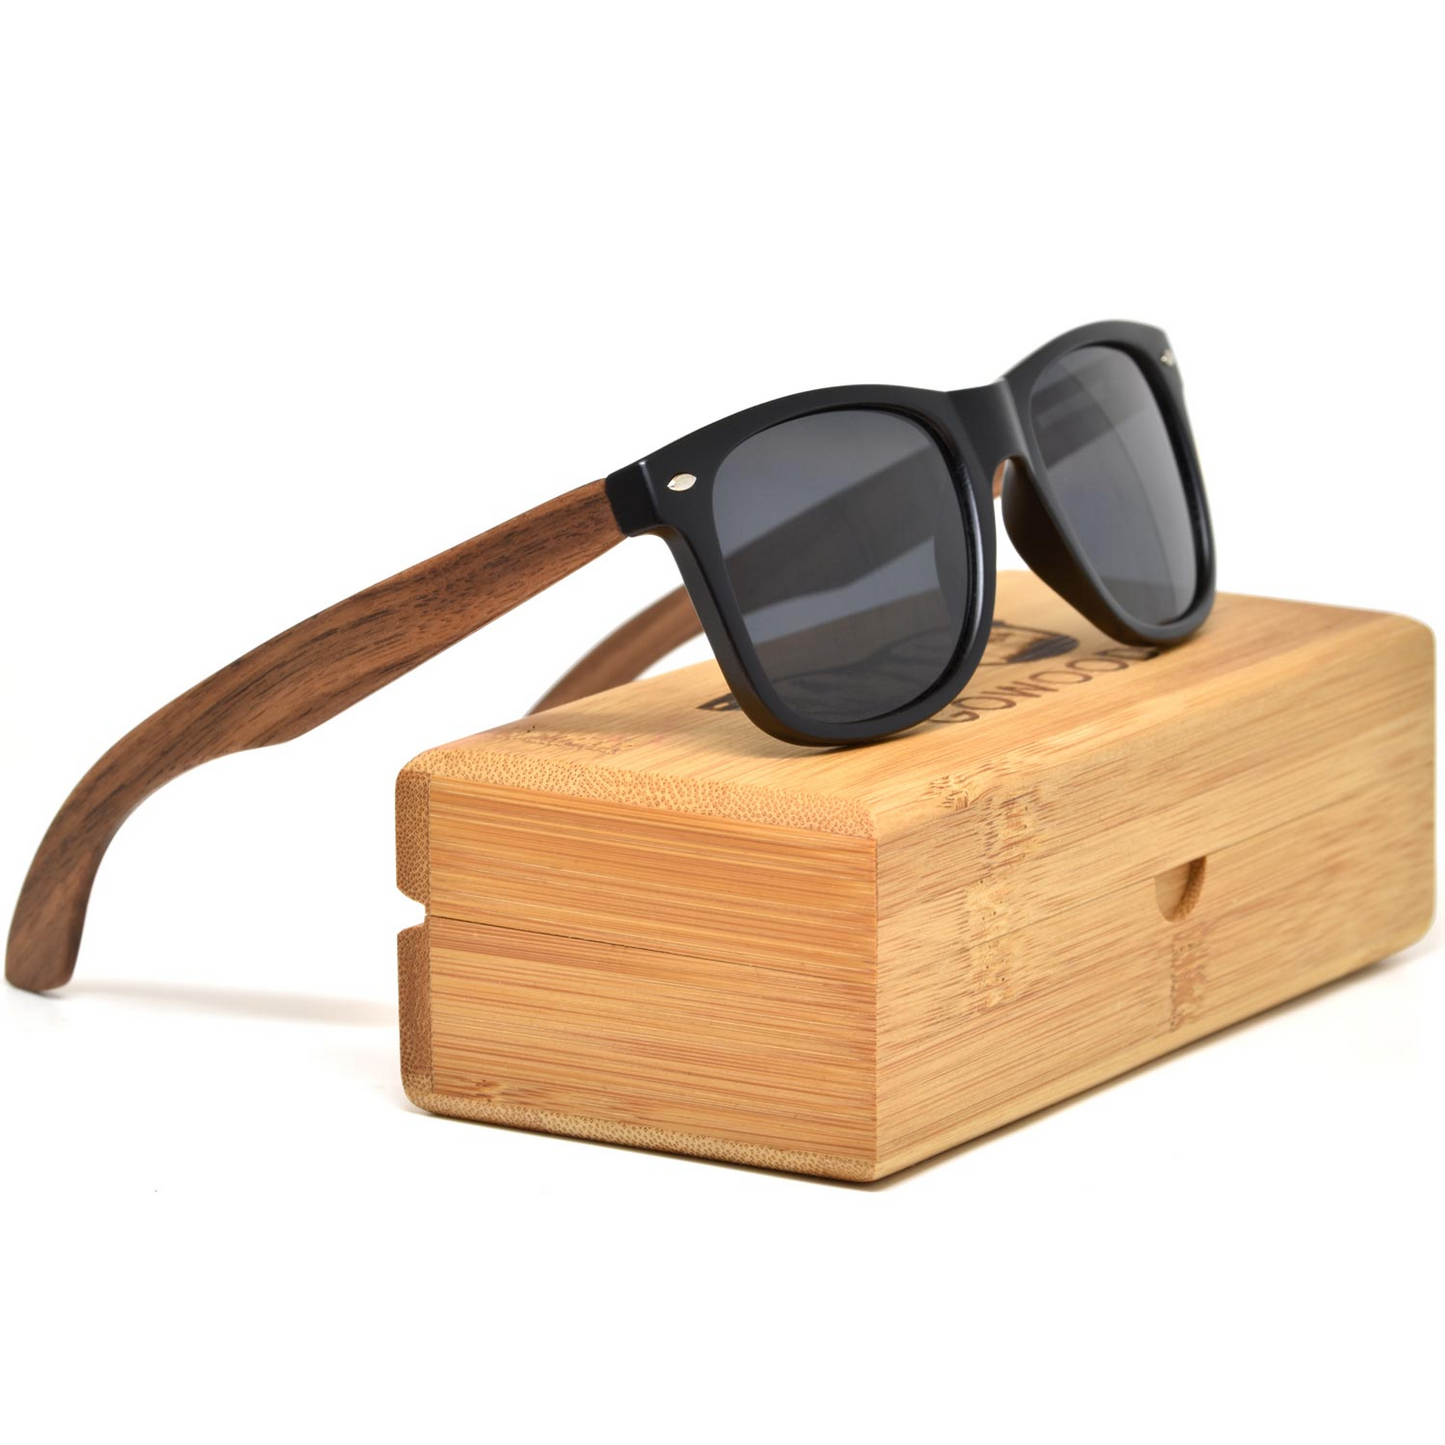 Walnut wood classic style sunglasses with black polarized lenses